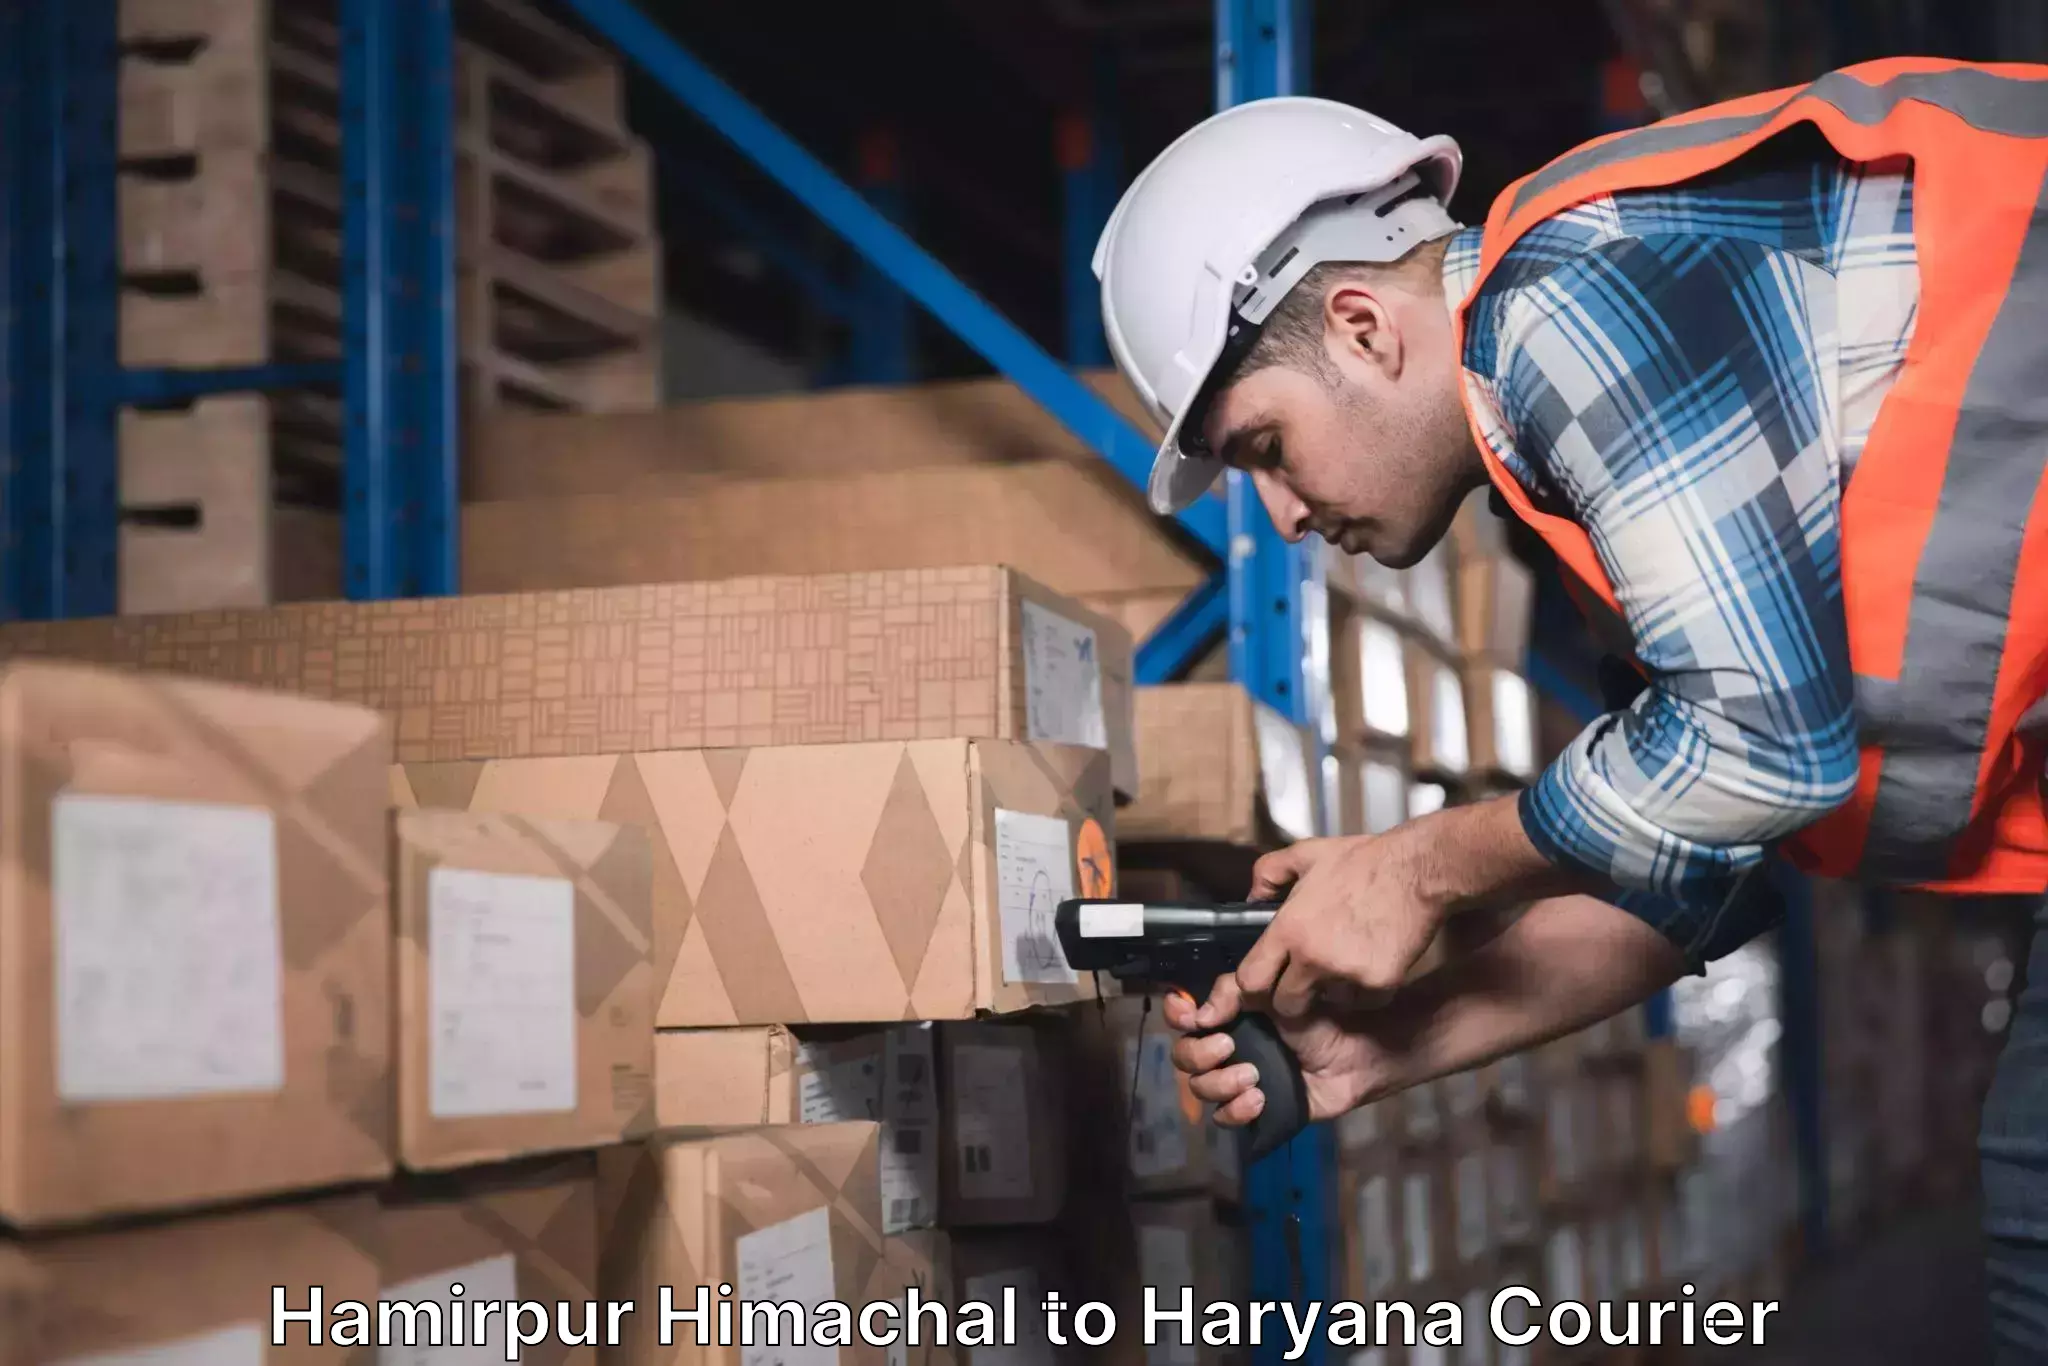 Courier service comparison Hamirpur Himachal to Bhuna